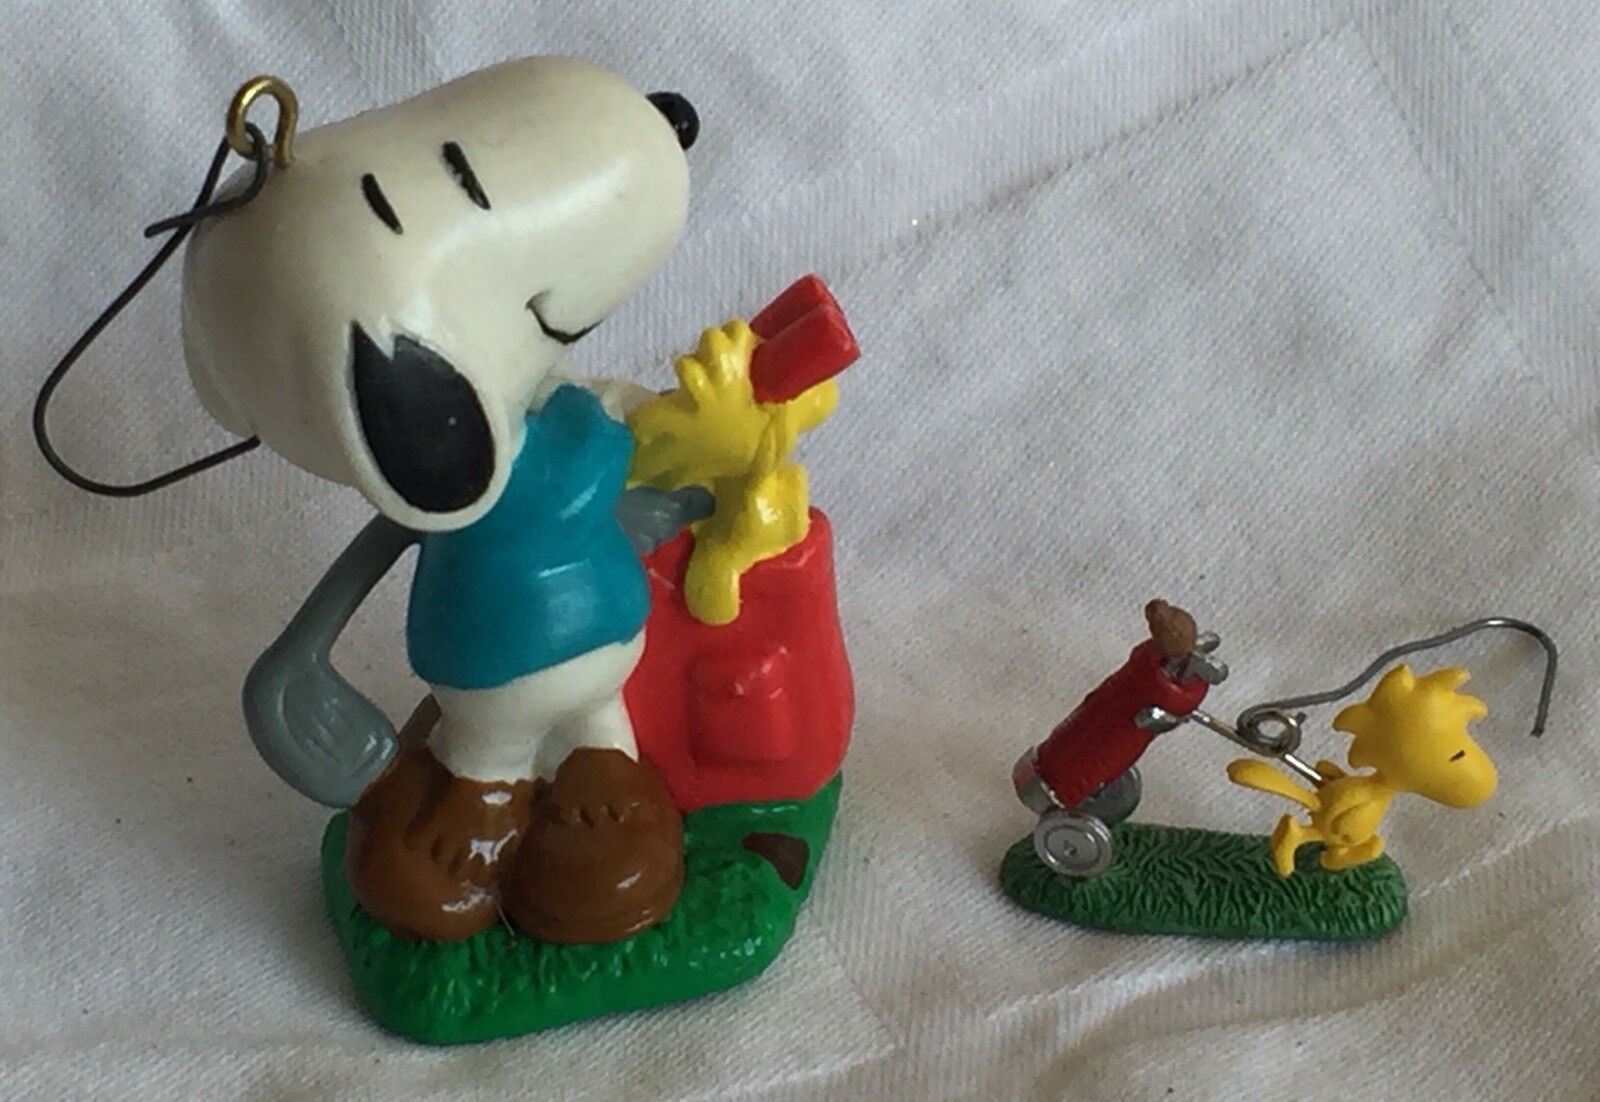 2009 Peanuts Snoopy & Woodstock Christmas Golf Ornaments Holiday Tree Decor Gift